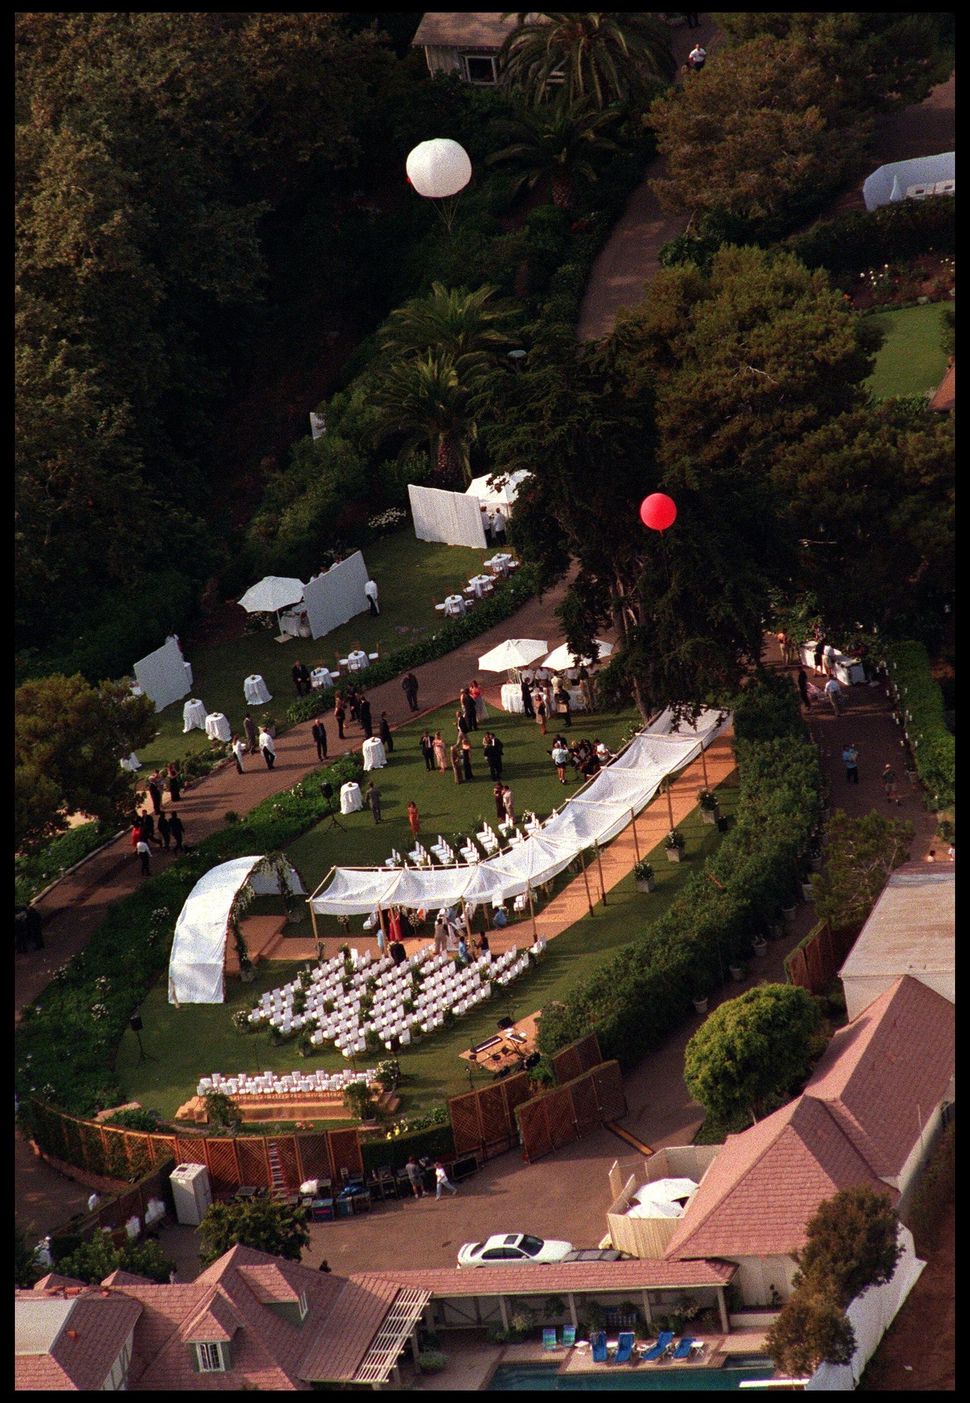 An aerial view of Brad Pitt and Jennifer Aniston's wedding venue